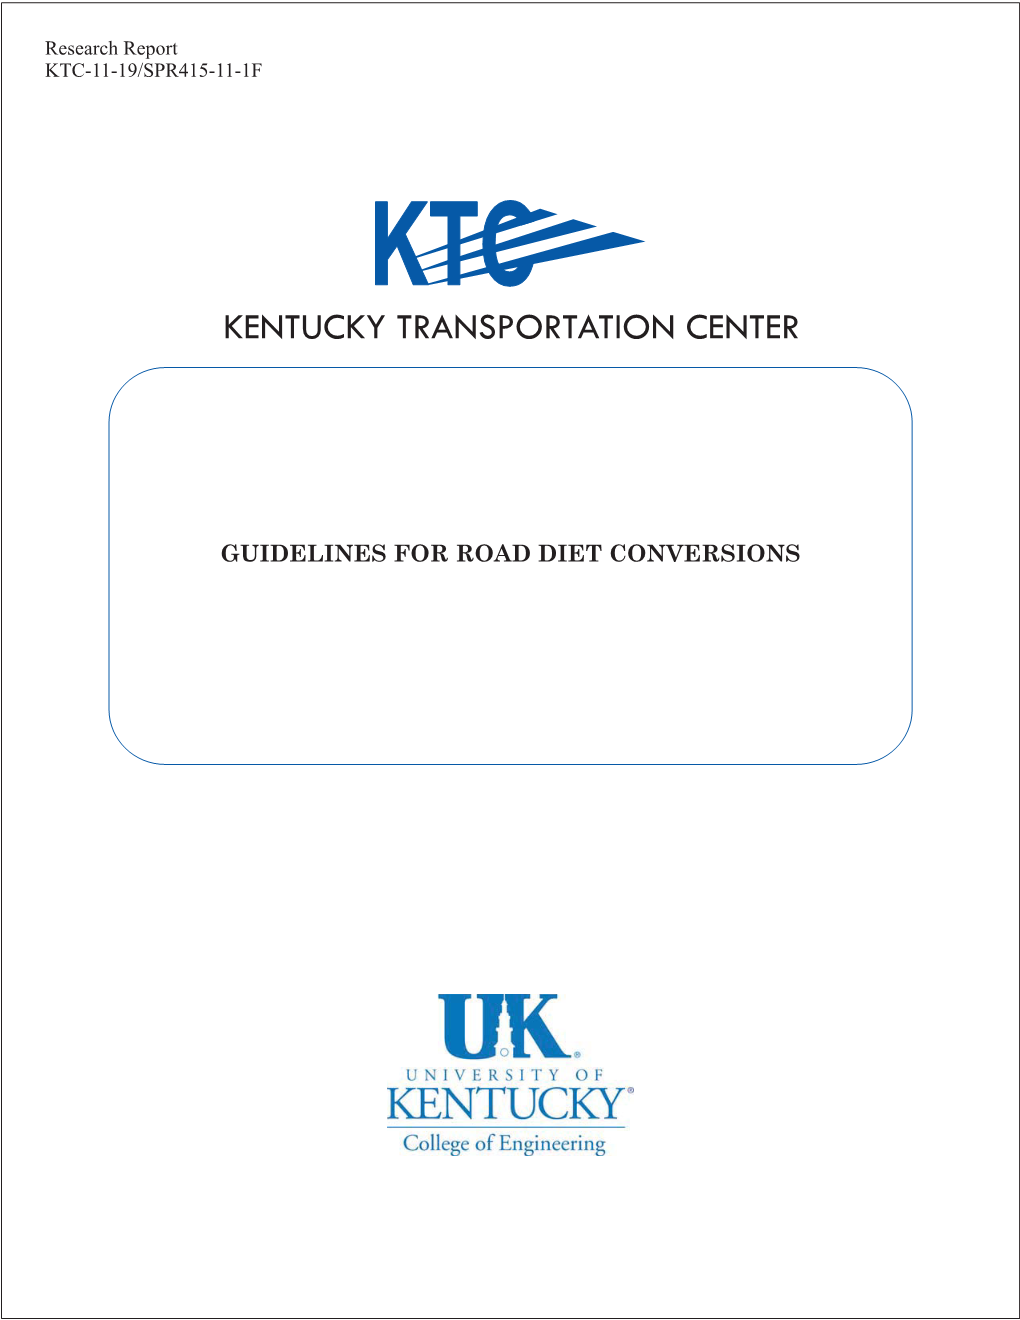 Kentucky Transportation Center